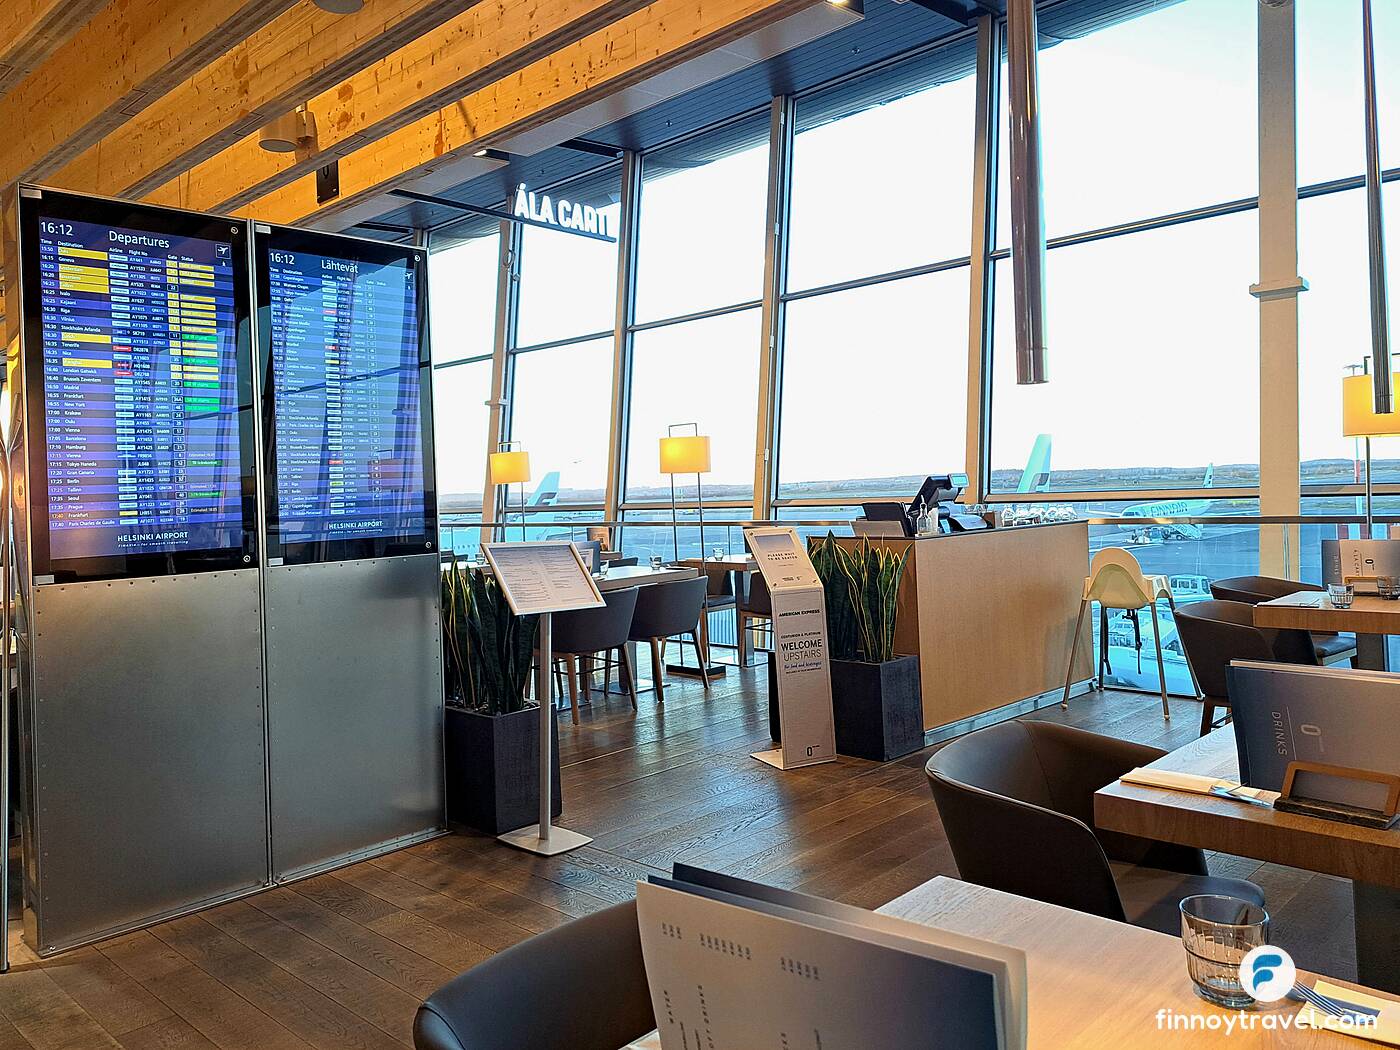 Restaurant and flight information screen